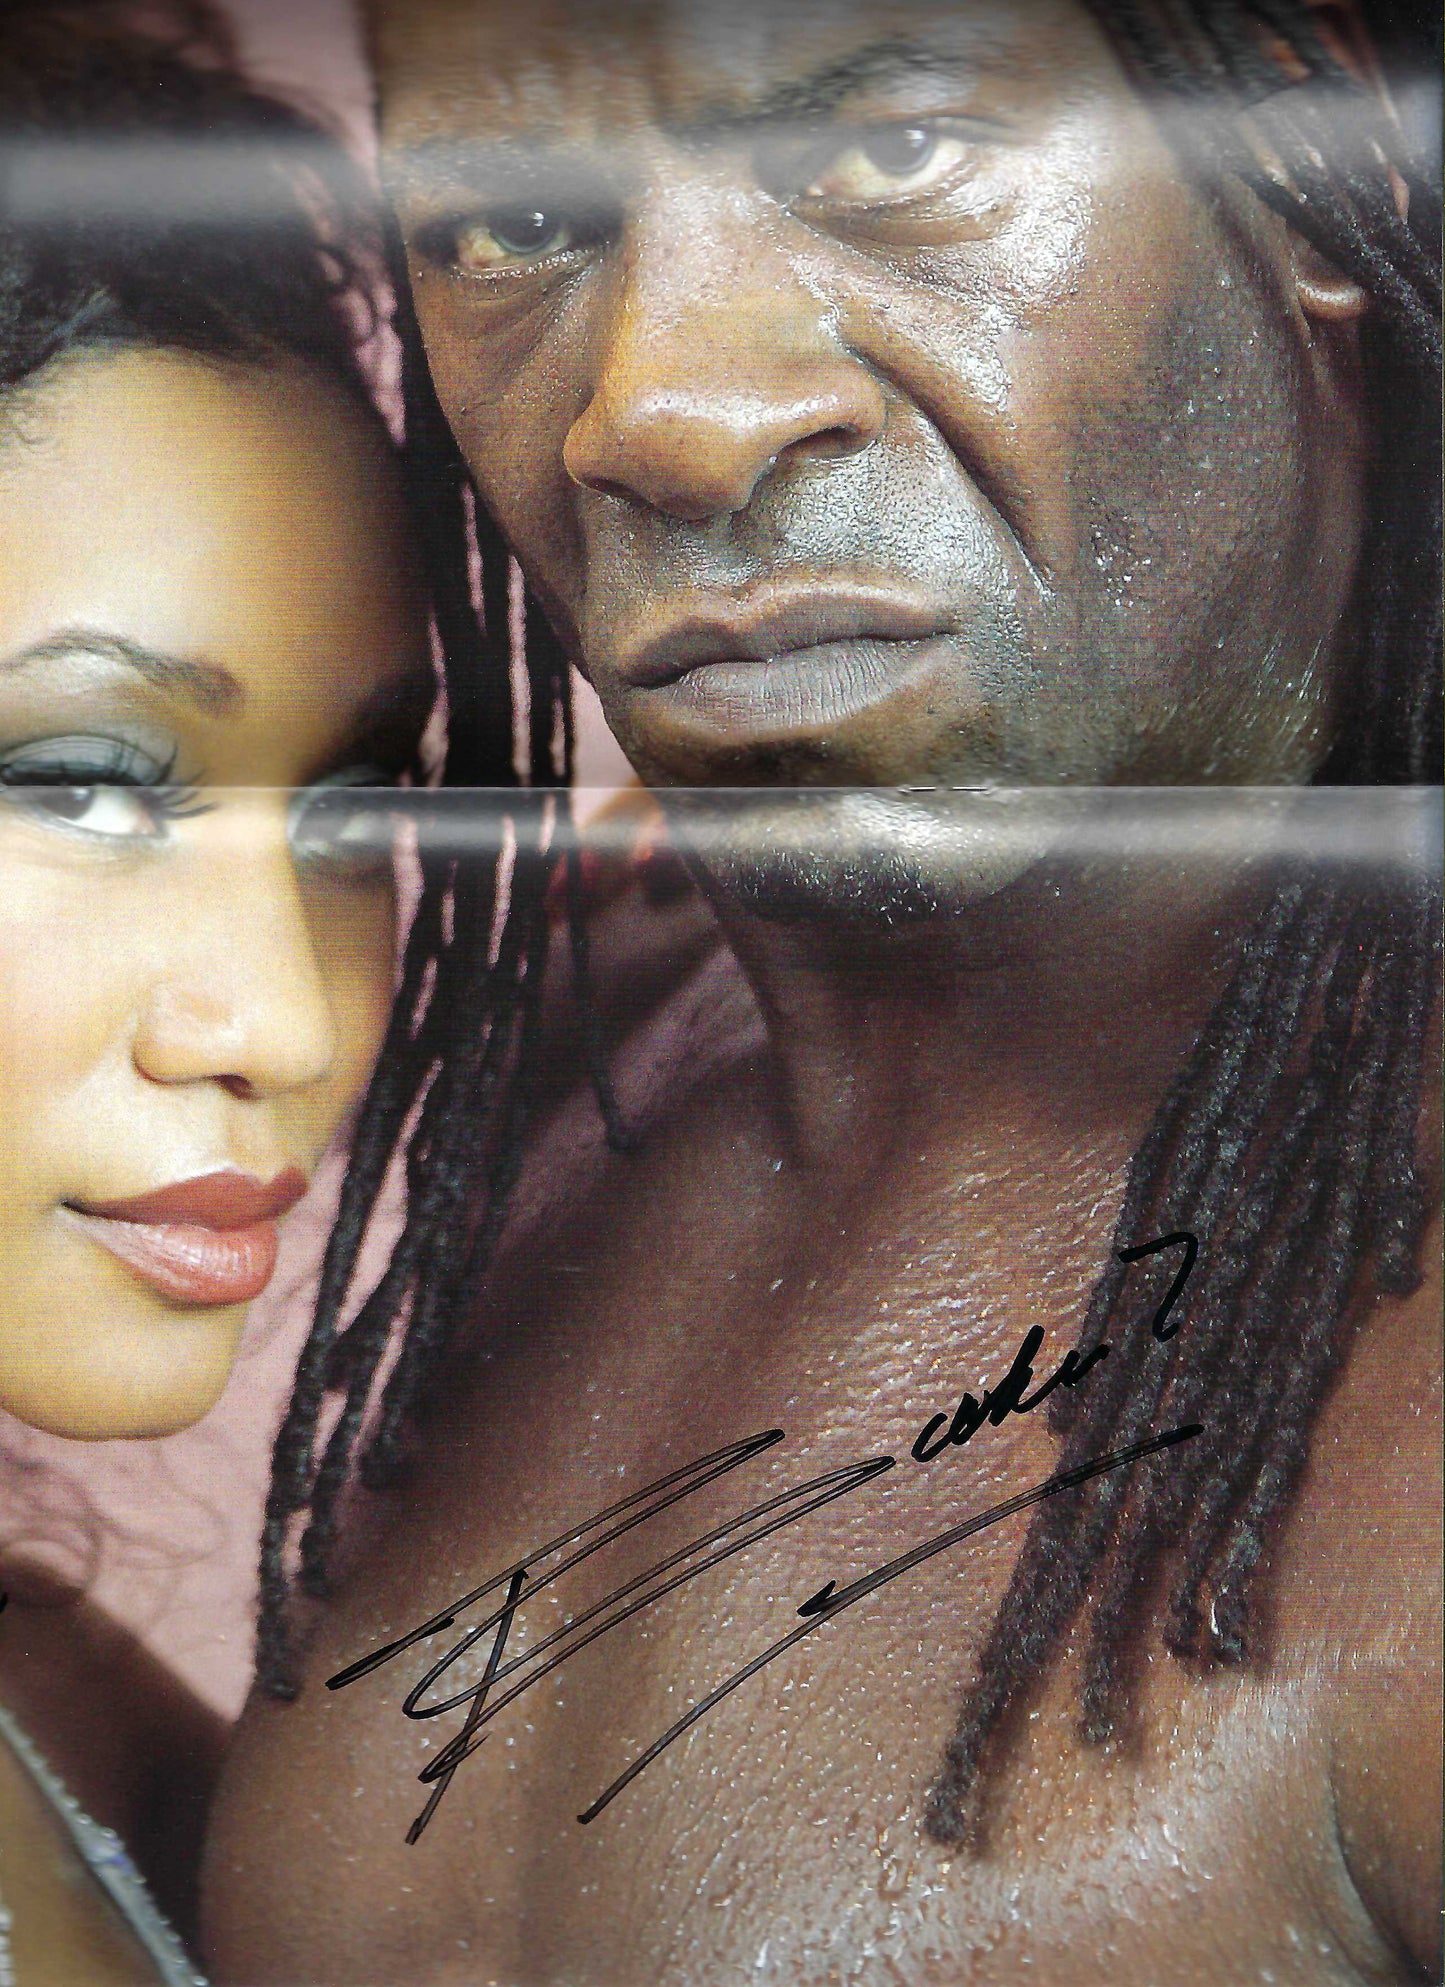 BD14  Booker T  Sharmell  Autographed Vintage Wrestling Magazine / Poster  w/COA